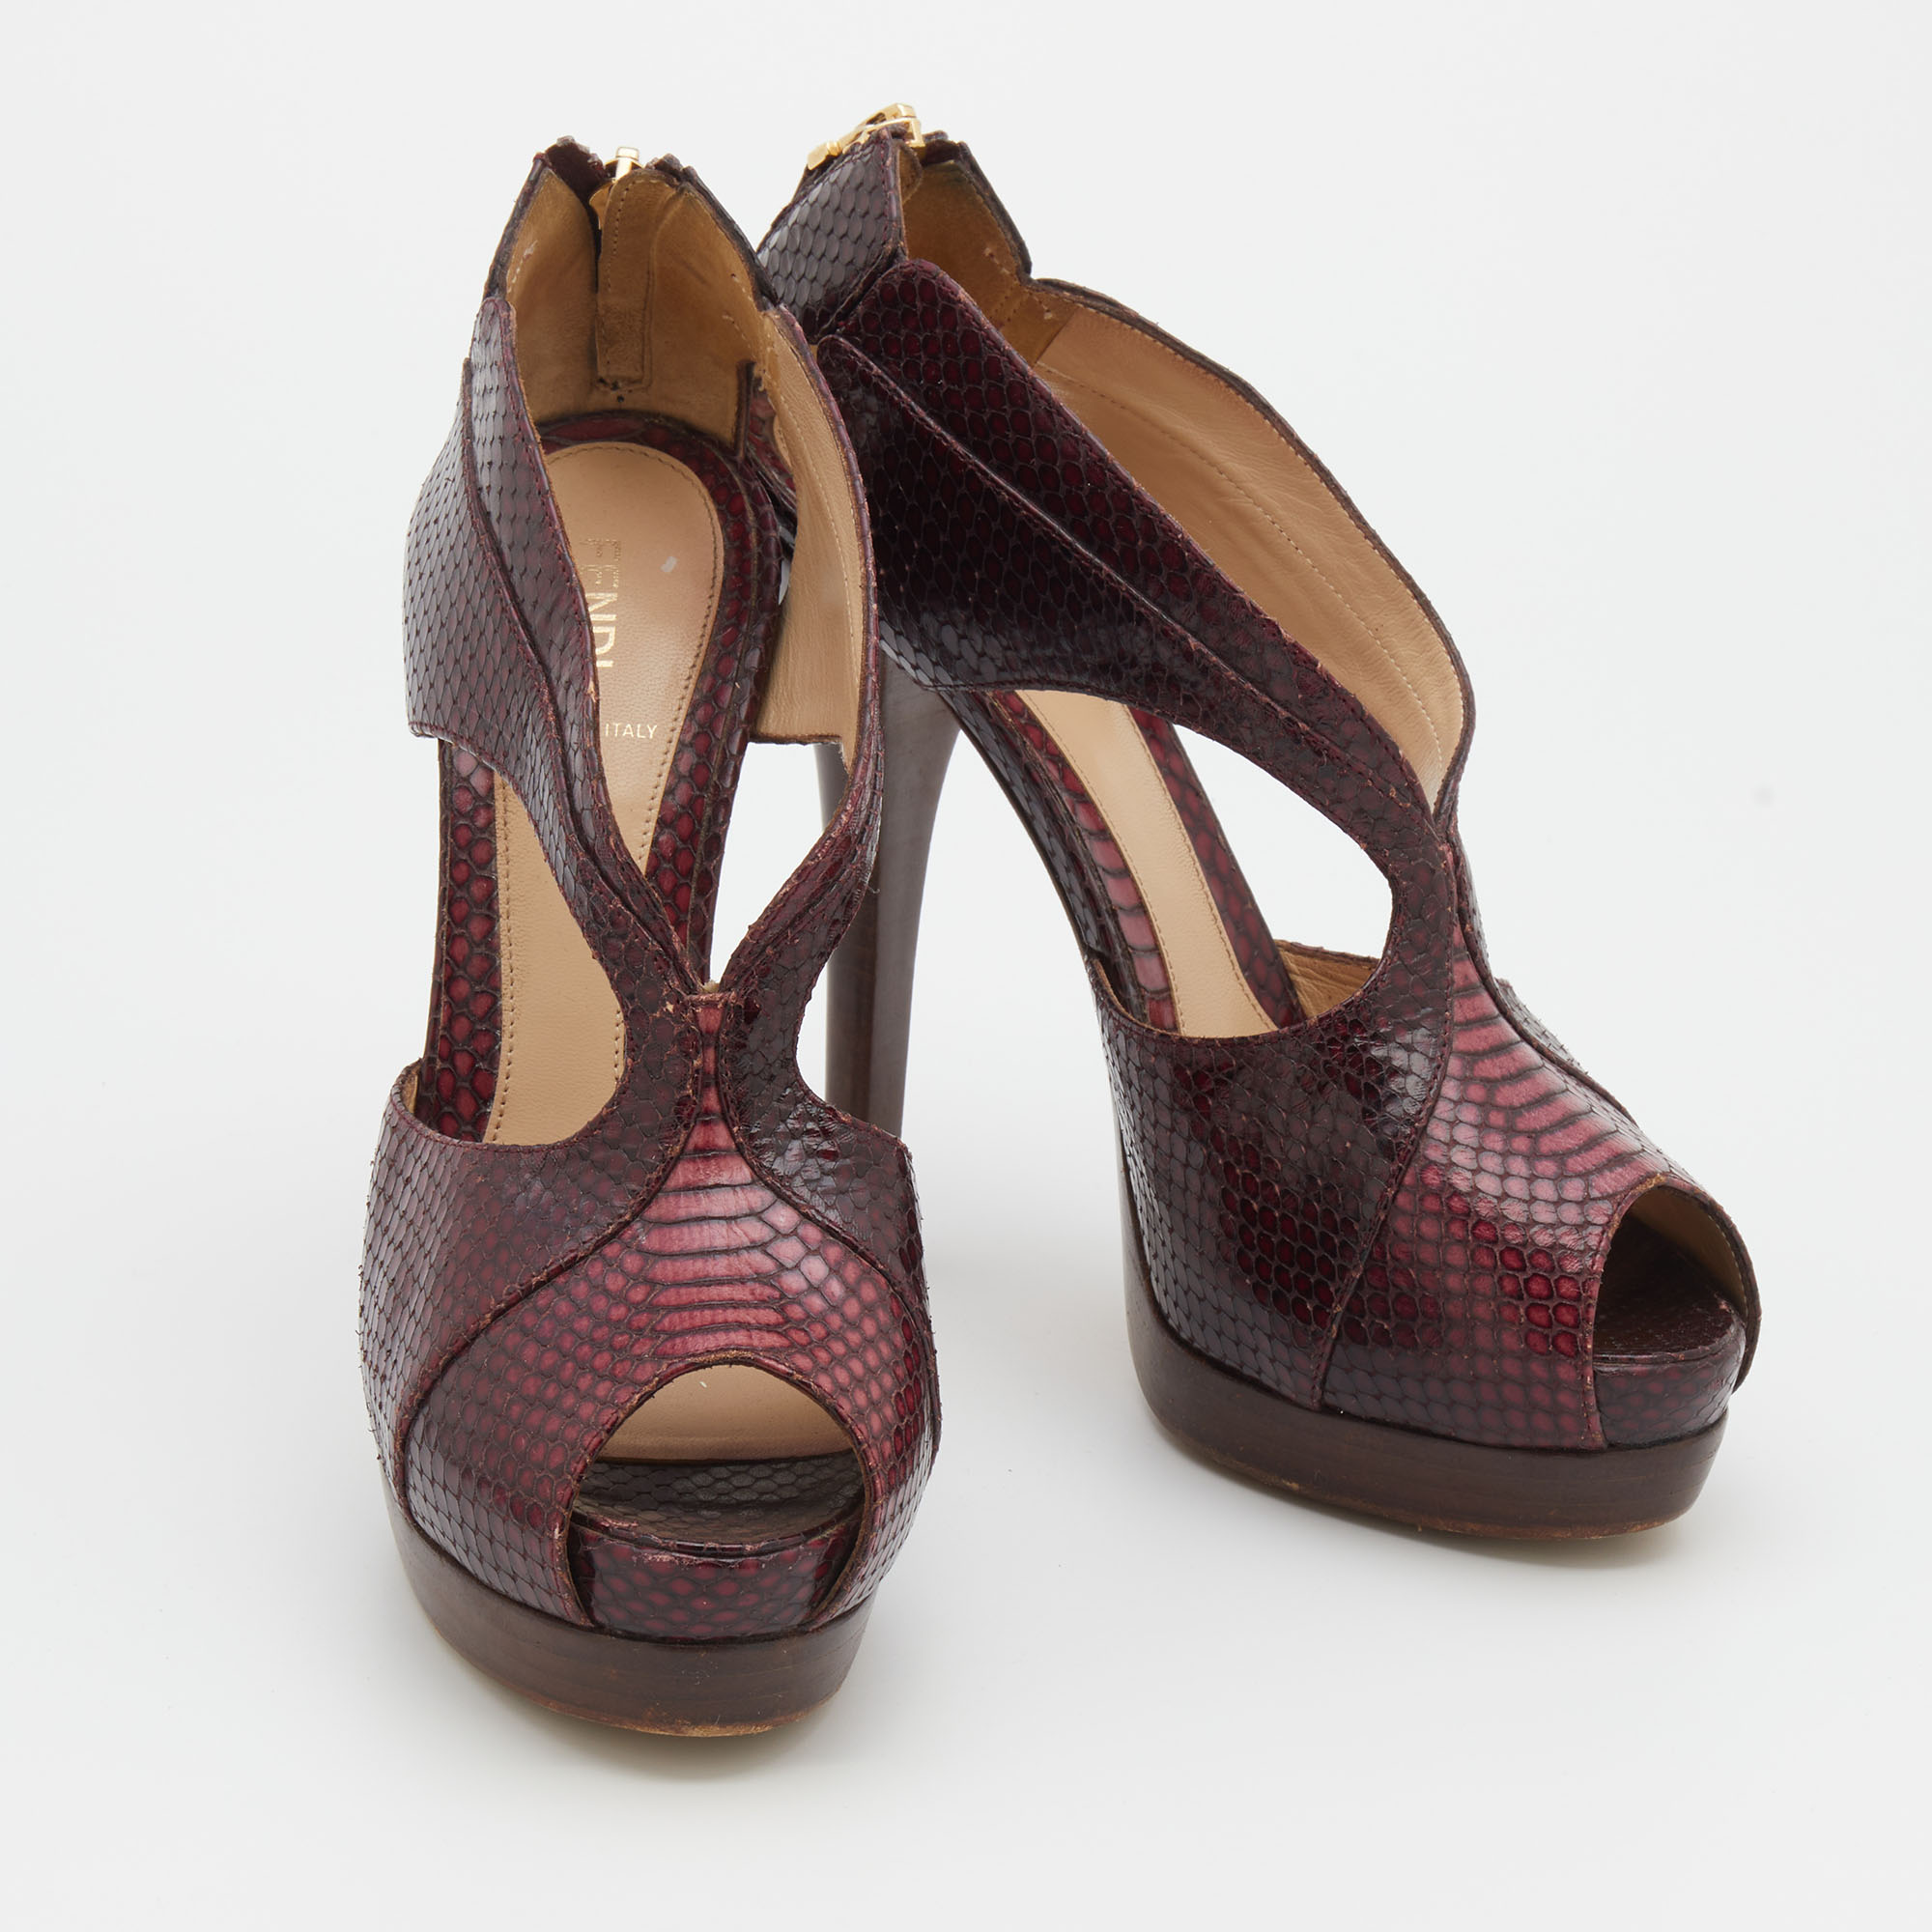 Fendi Burgundy Python Embossed Leather Strappy Peep Toe Platform Sandals Size 40